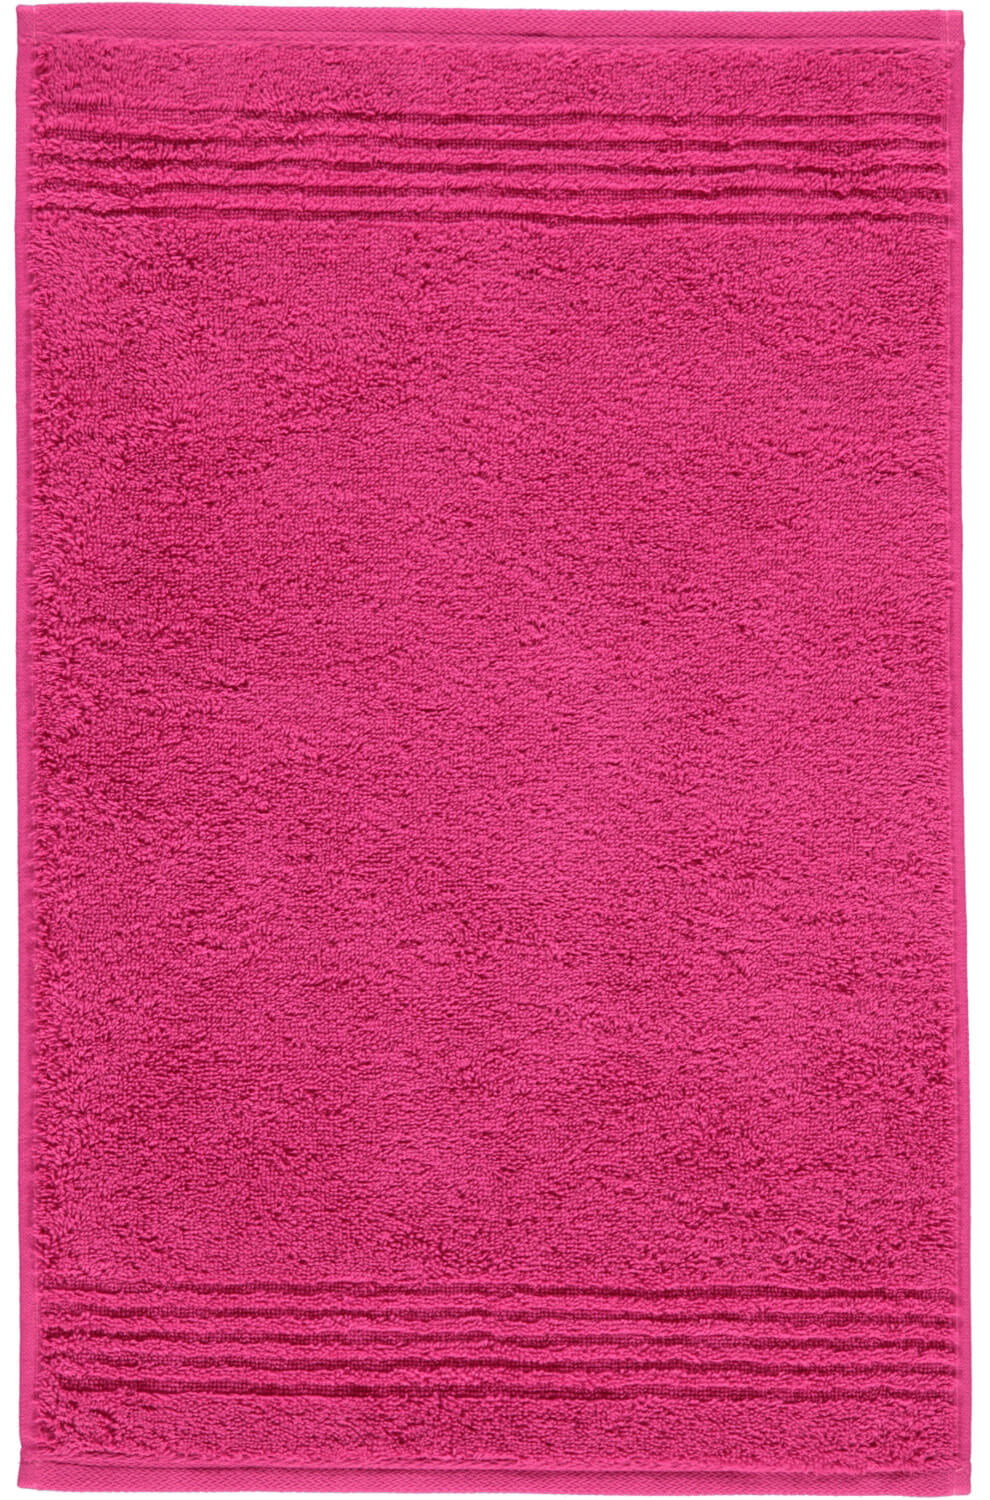 Розовое полотенце Essential Pink ☞ Размер: 30 x 50 см